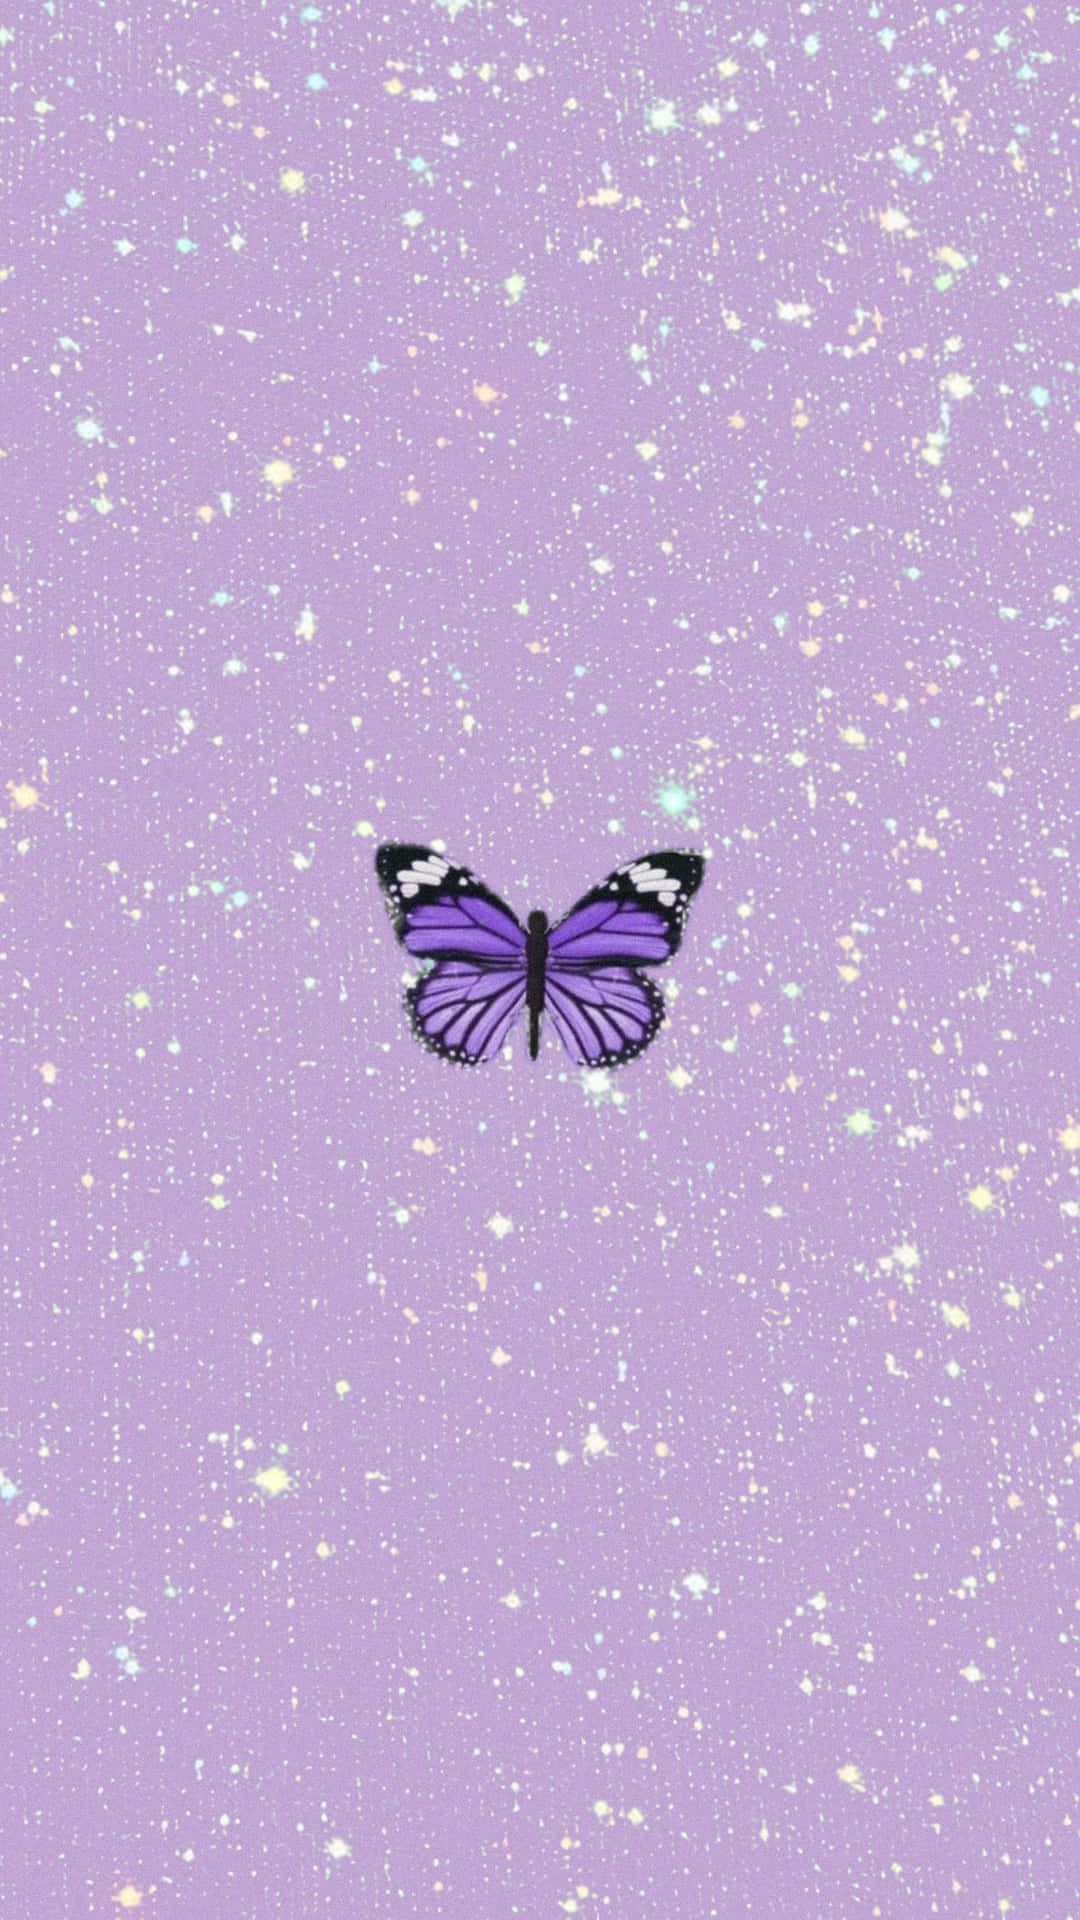 A purple butterfly on top of some glitter - Pastel purple